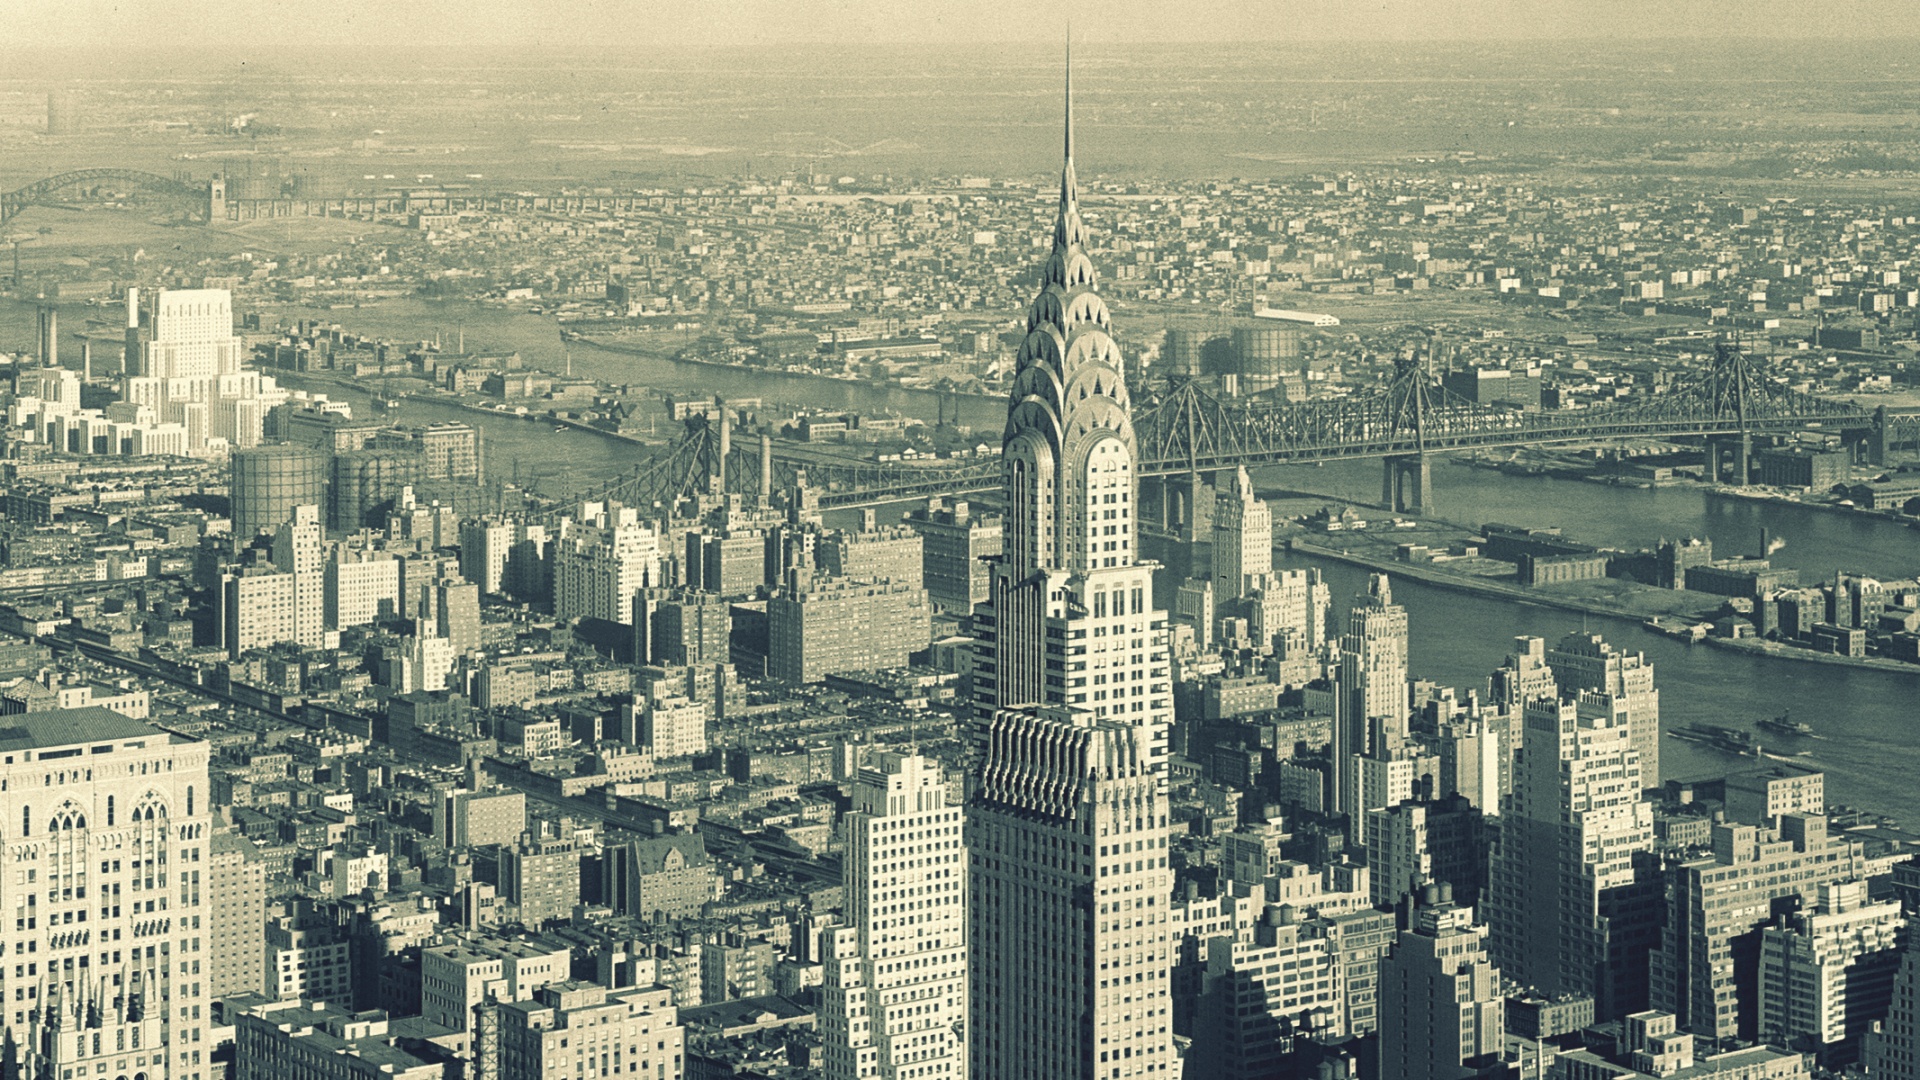 Панорама Нью-Йорка обои